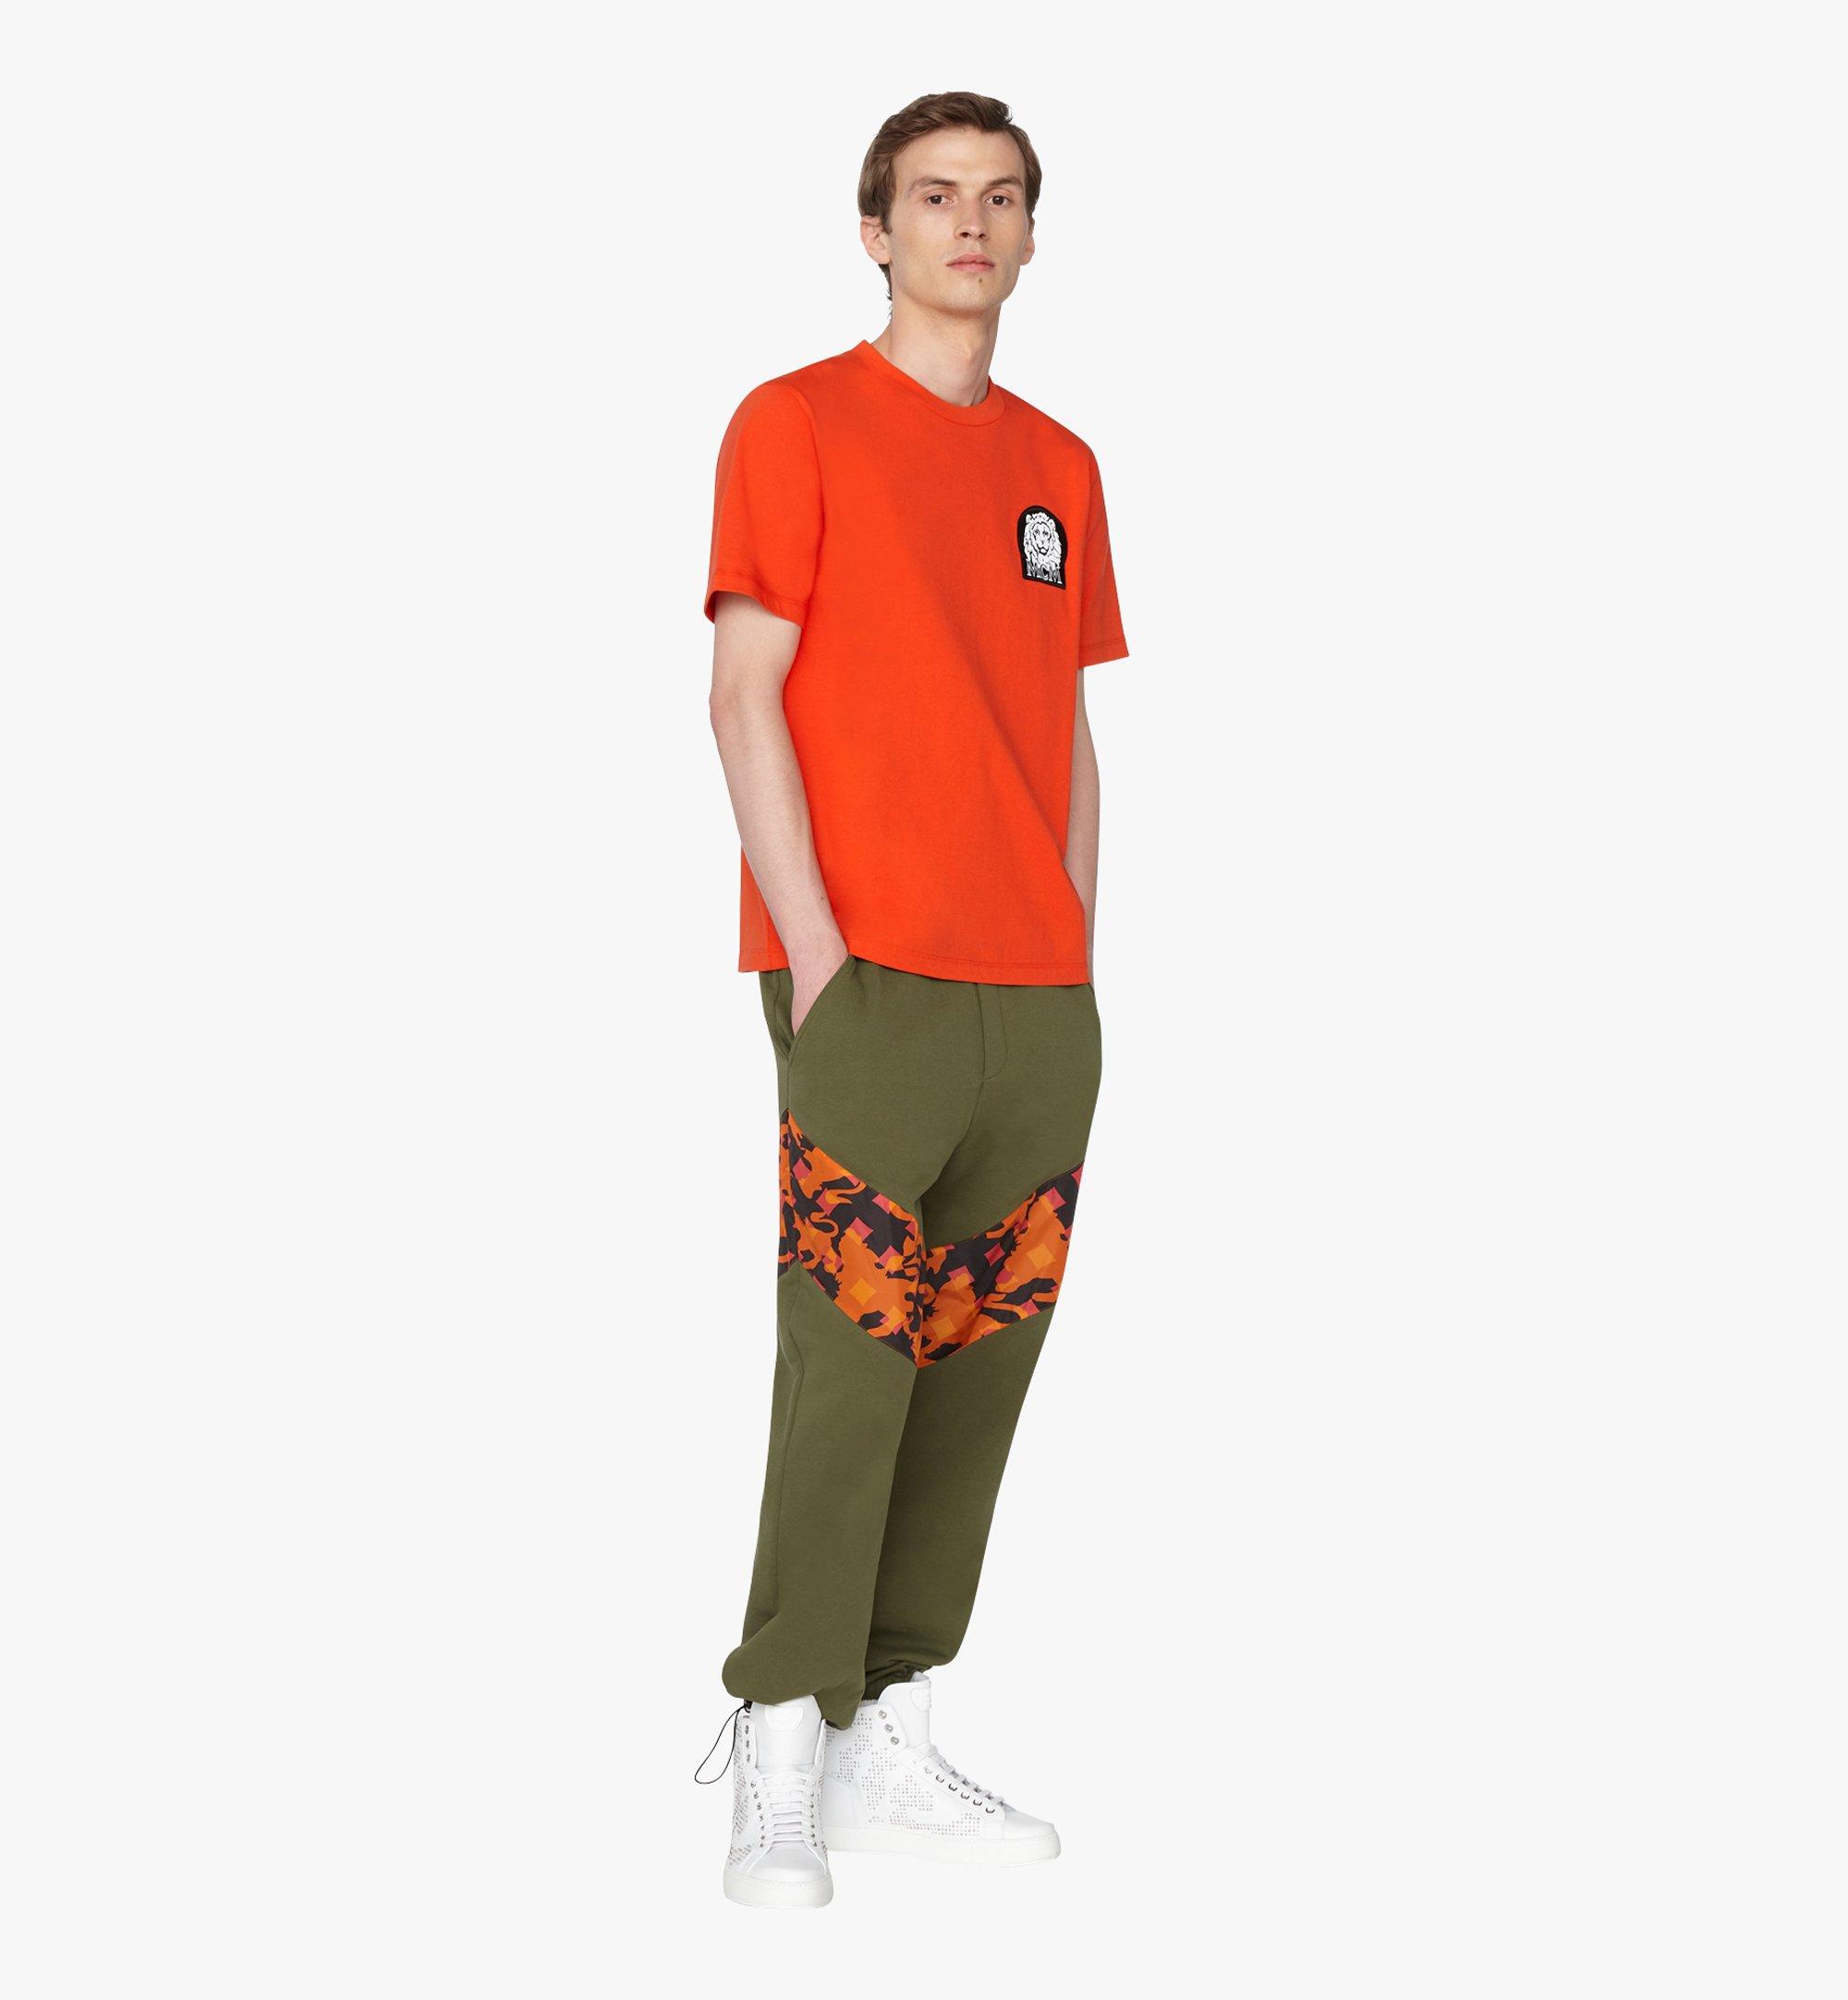 green and orange track pants